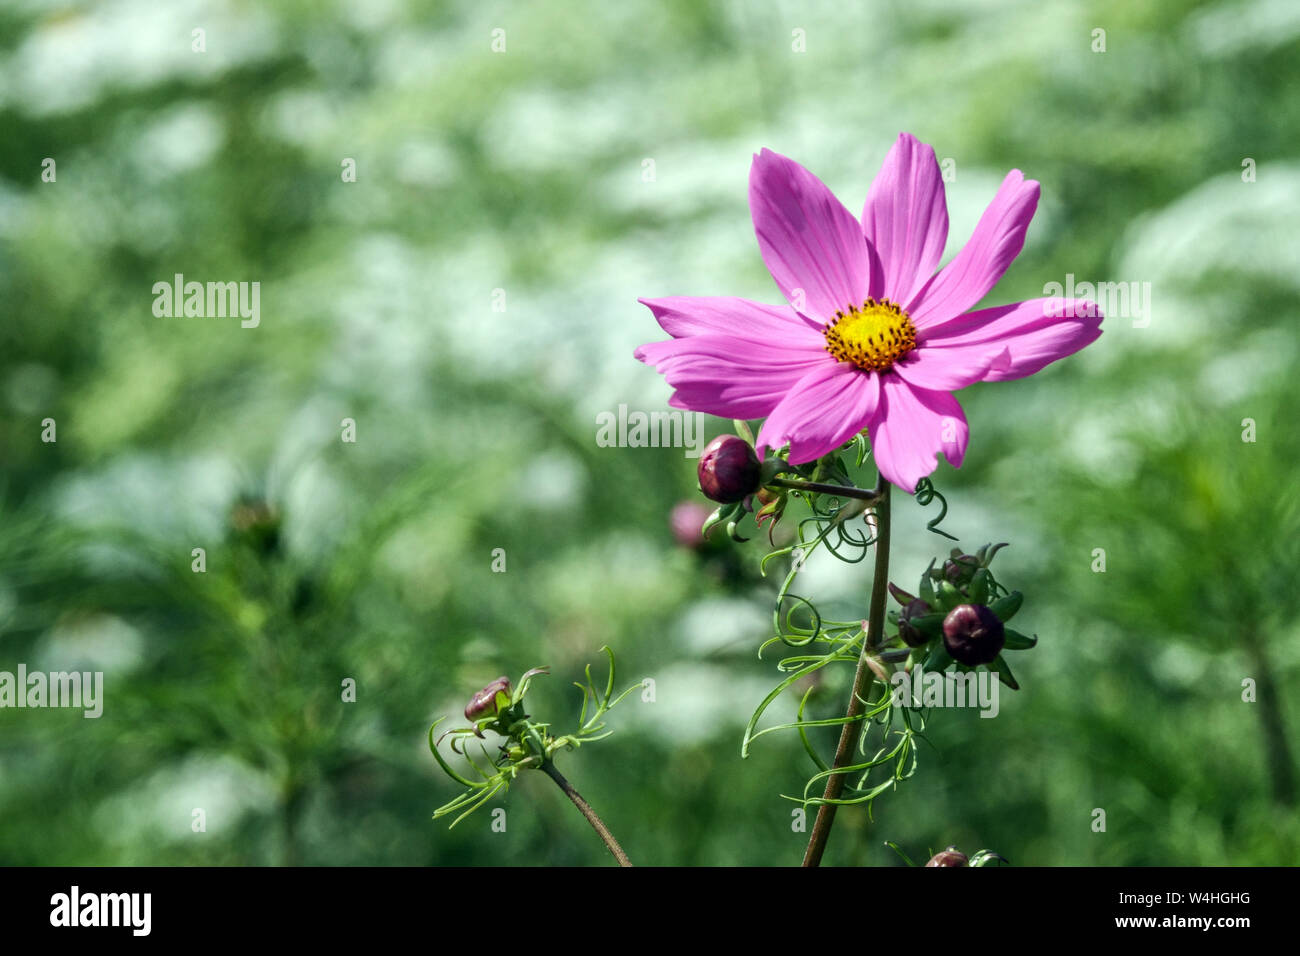 Garden Cosmos bipinnatus, pink flower portrait, Mexican aster Cosmos flower Stock Photo